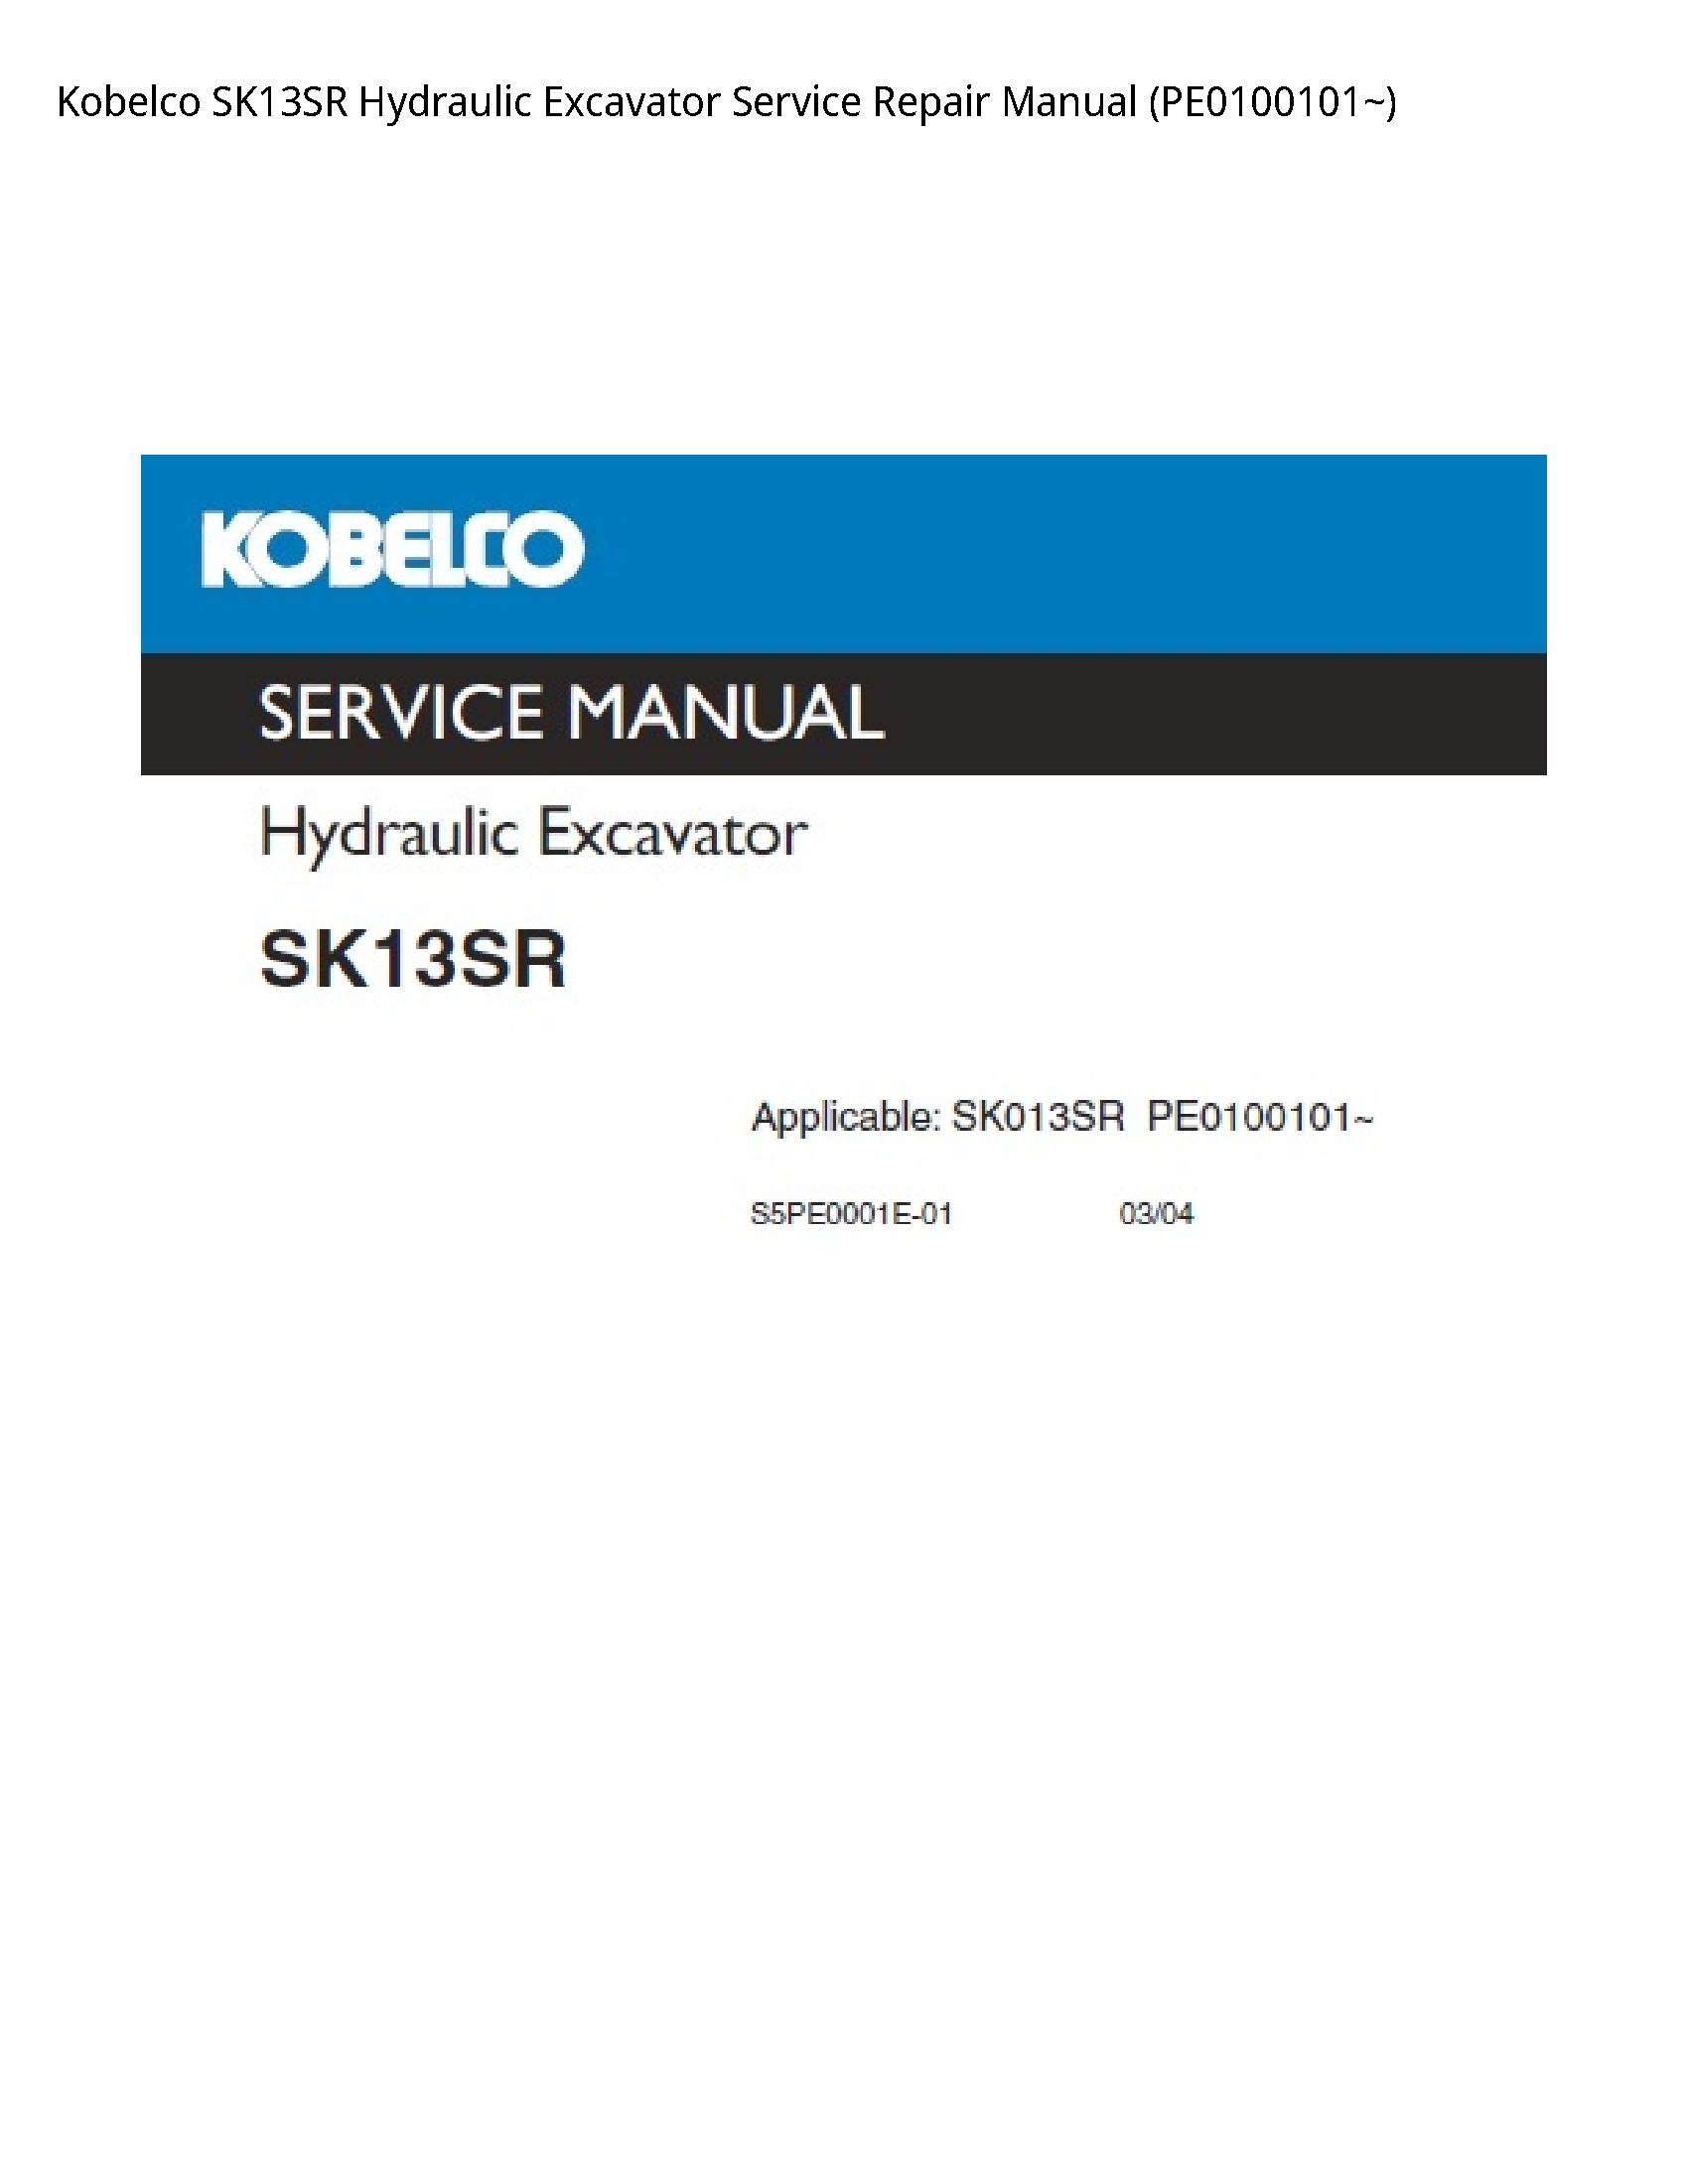 Kobelco SK13SR Hydraulic Excavator manual